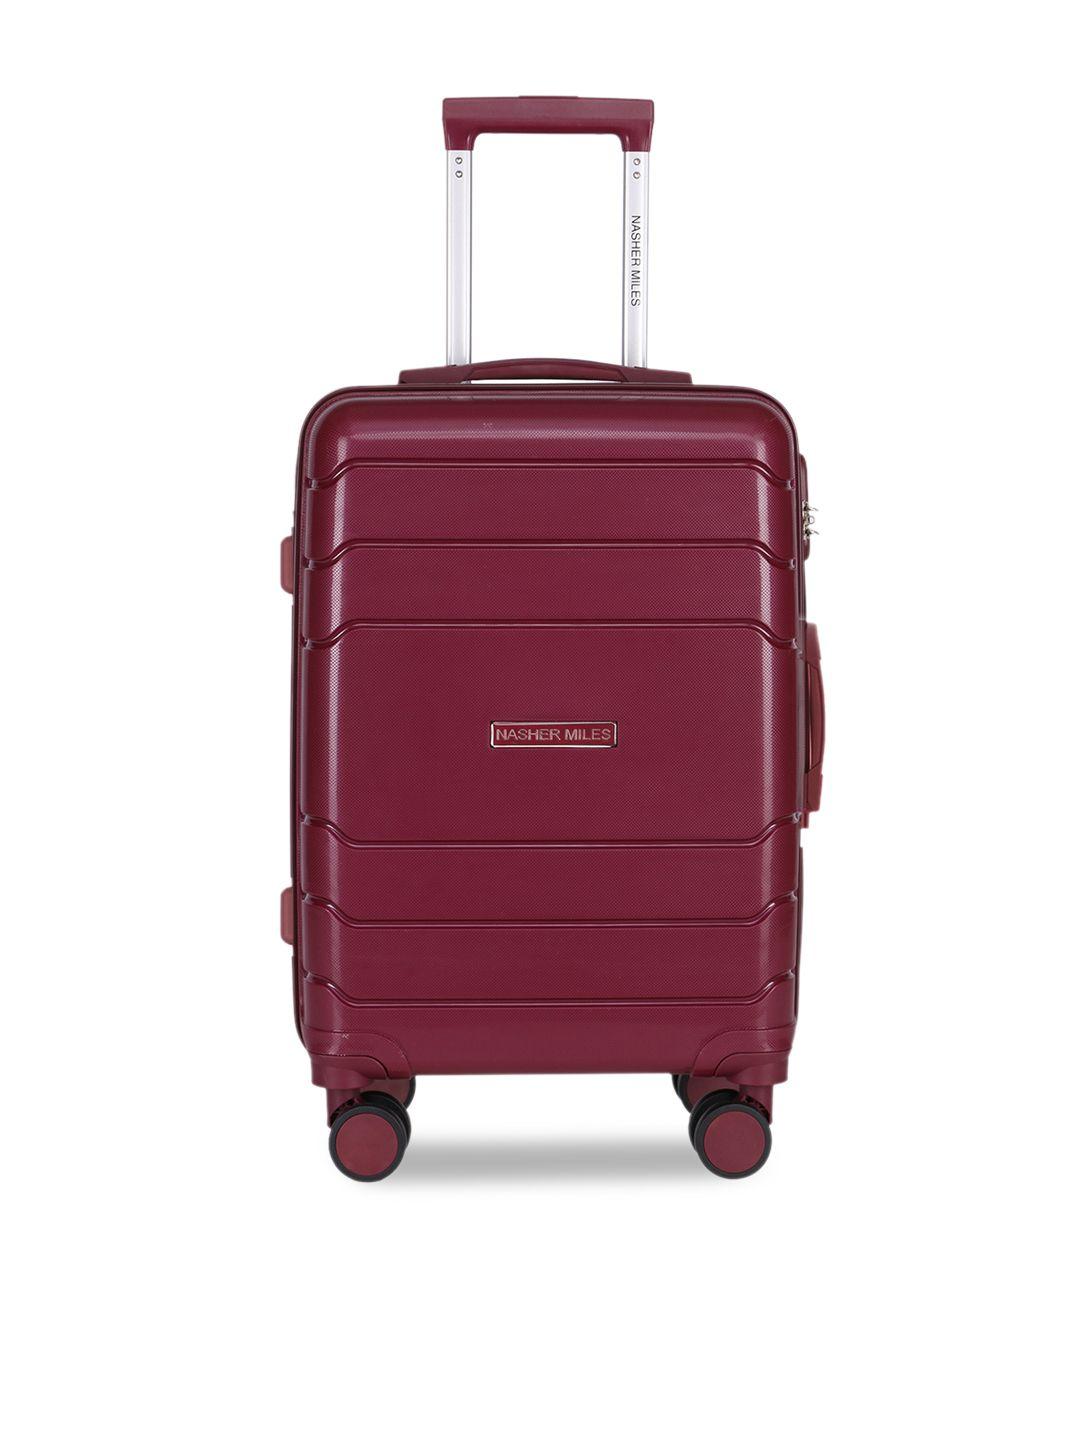 nasher miles unisex burgundy patterned hard-sided large trolley bag